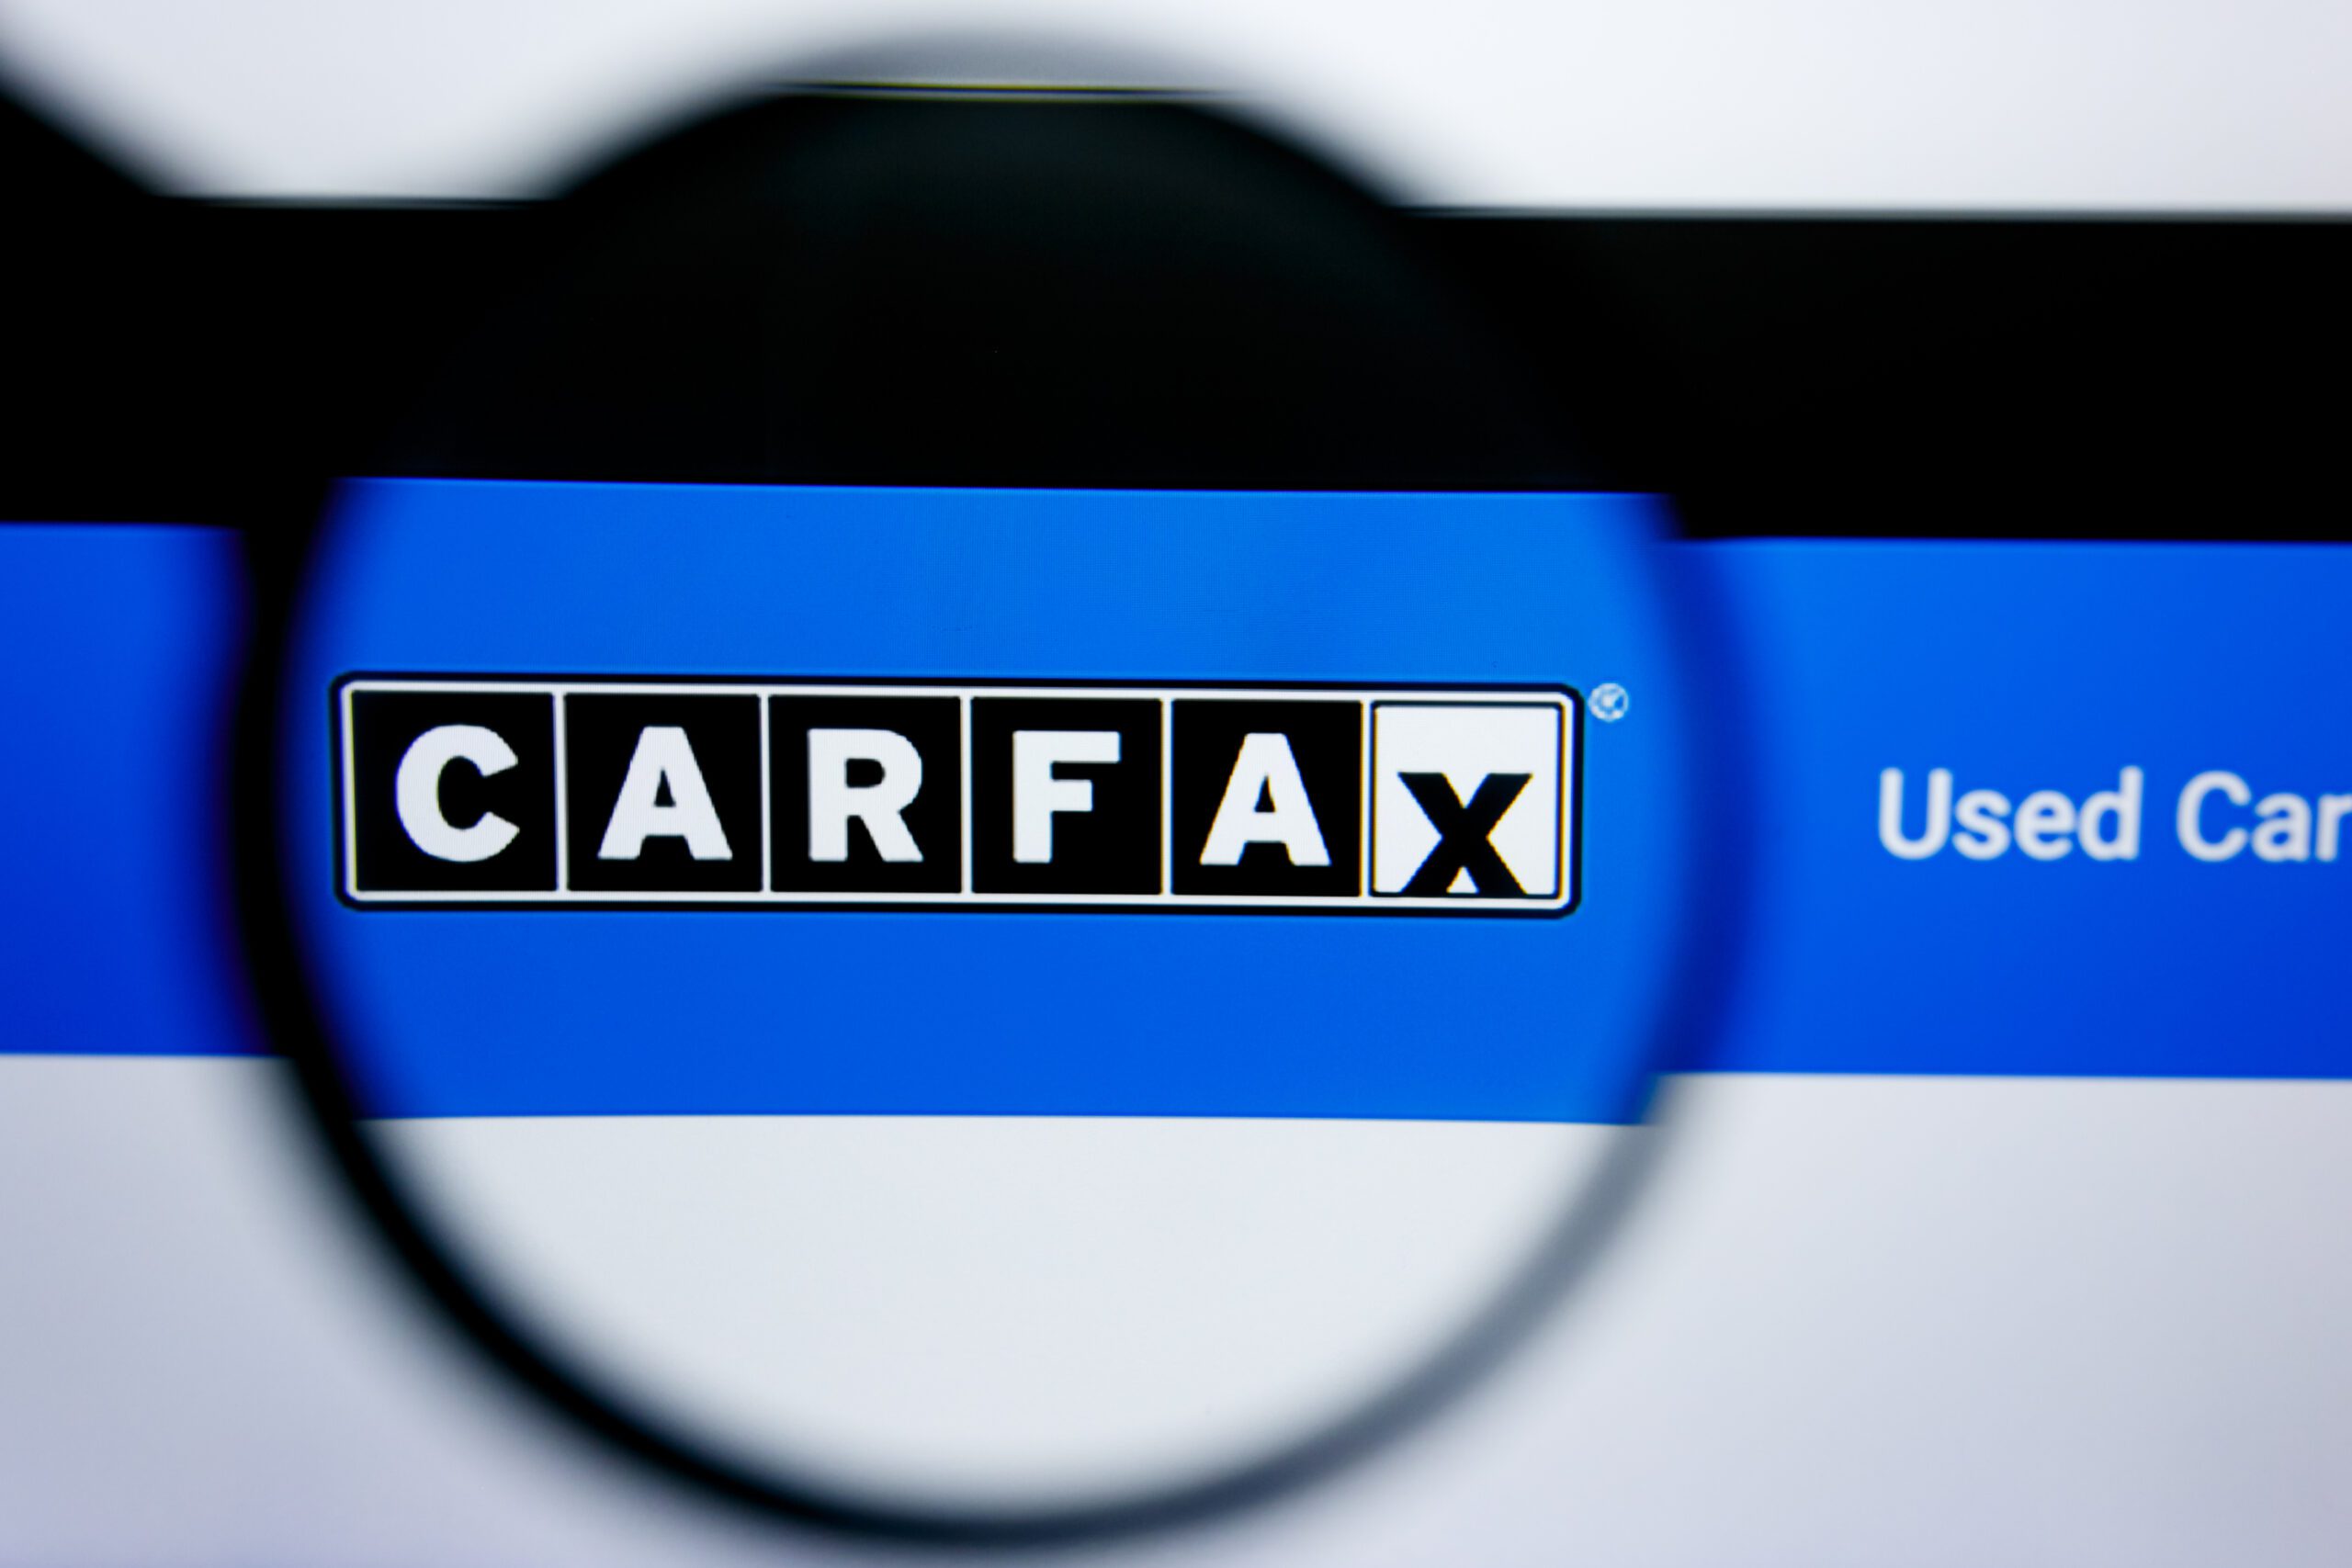 carfax on computer screen